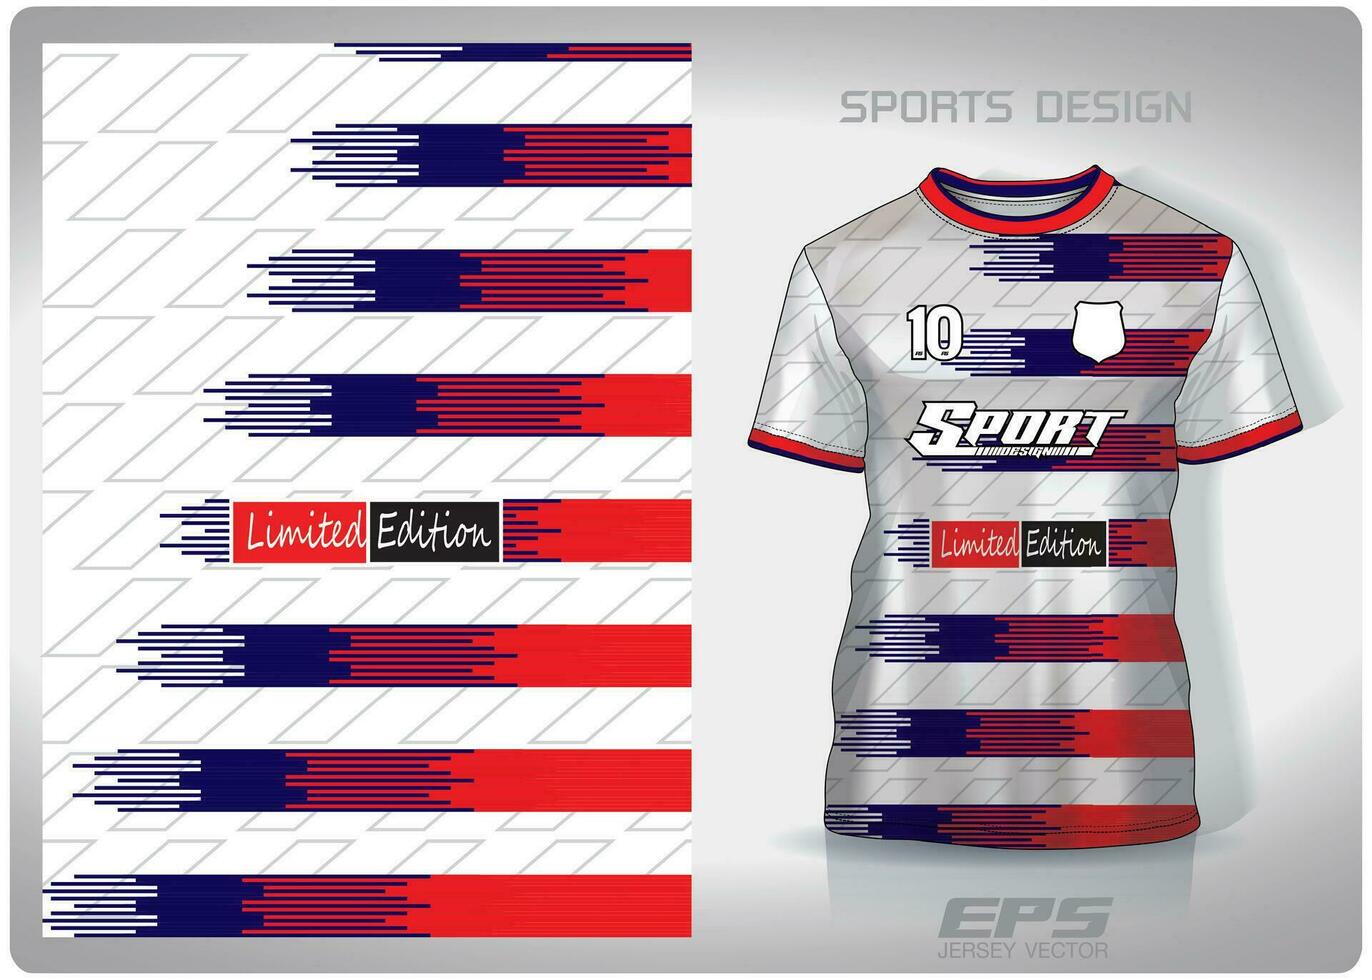 Vector sports shirt background image.White blue red horizontal stripes pattern design, illustration, textile background for sports t-shirt, football jersey shirt